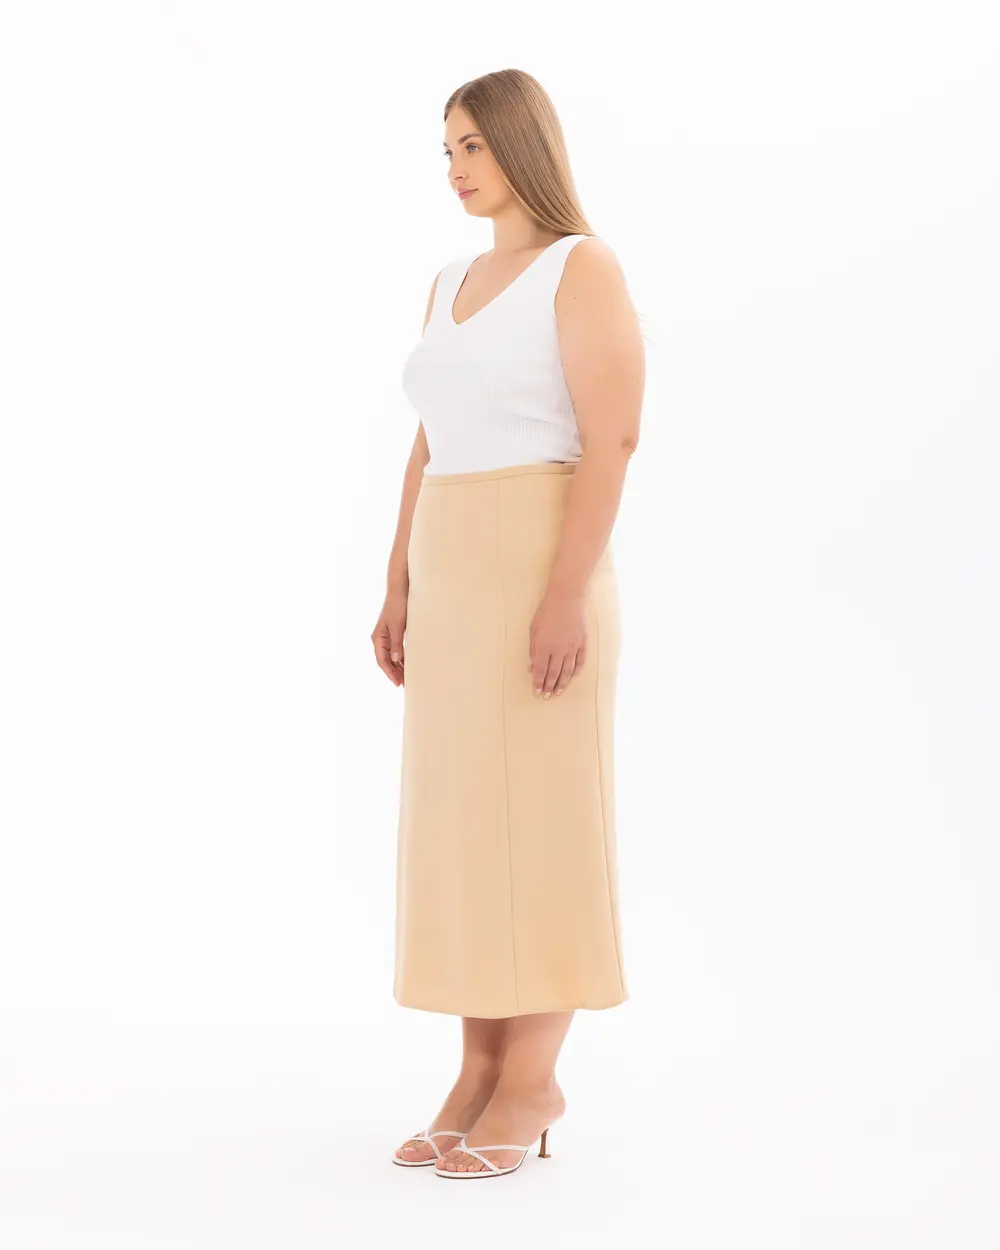 Plus Size Midi Length Classic Skirt